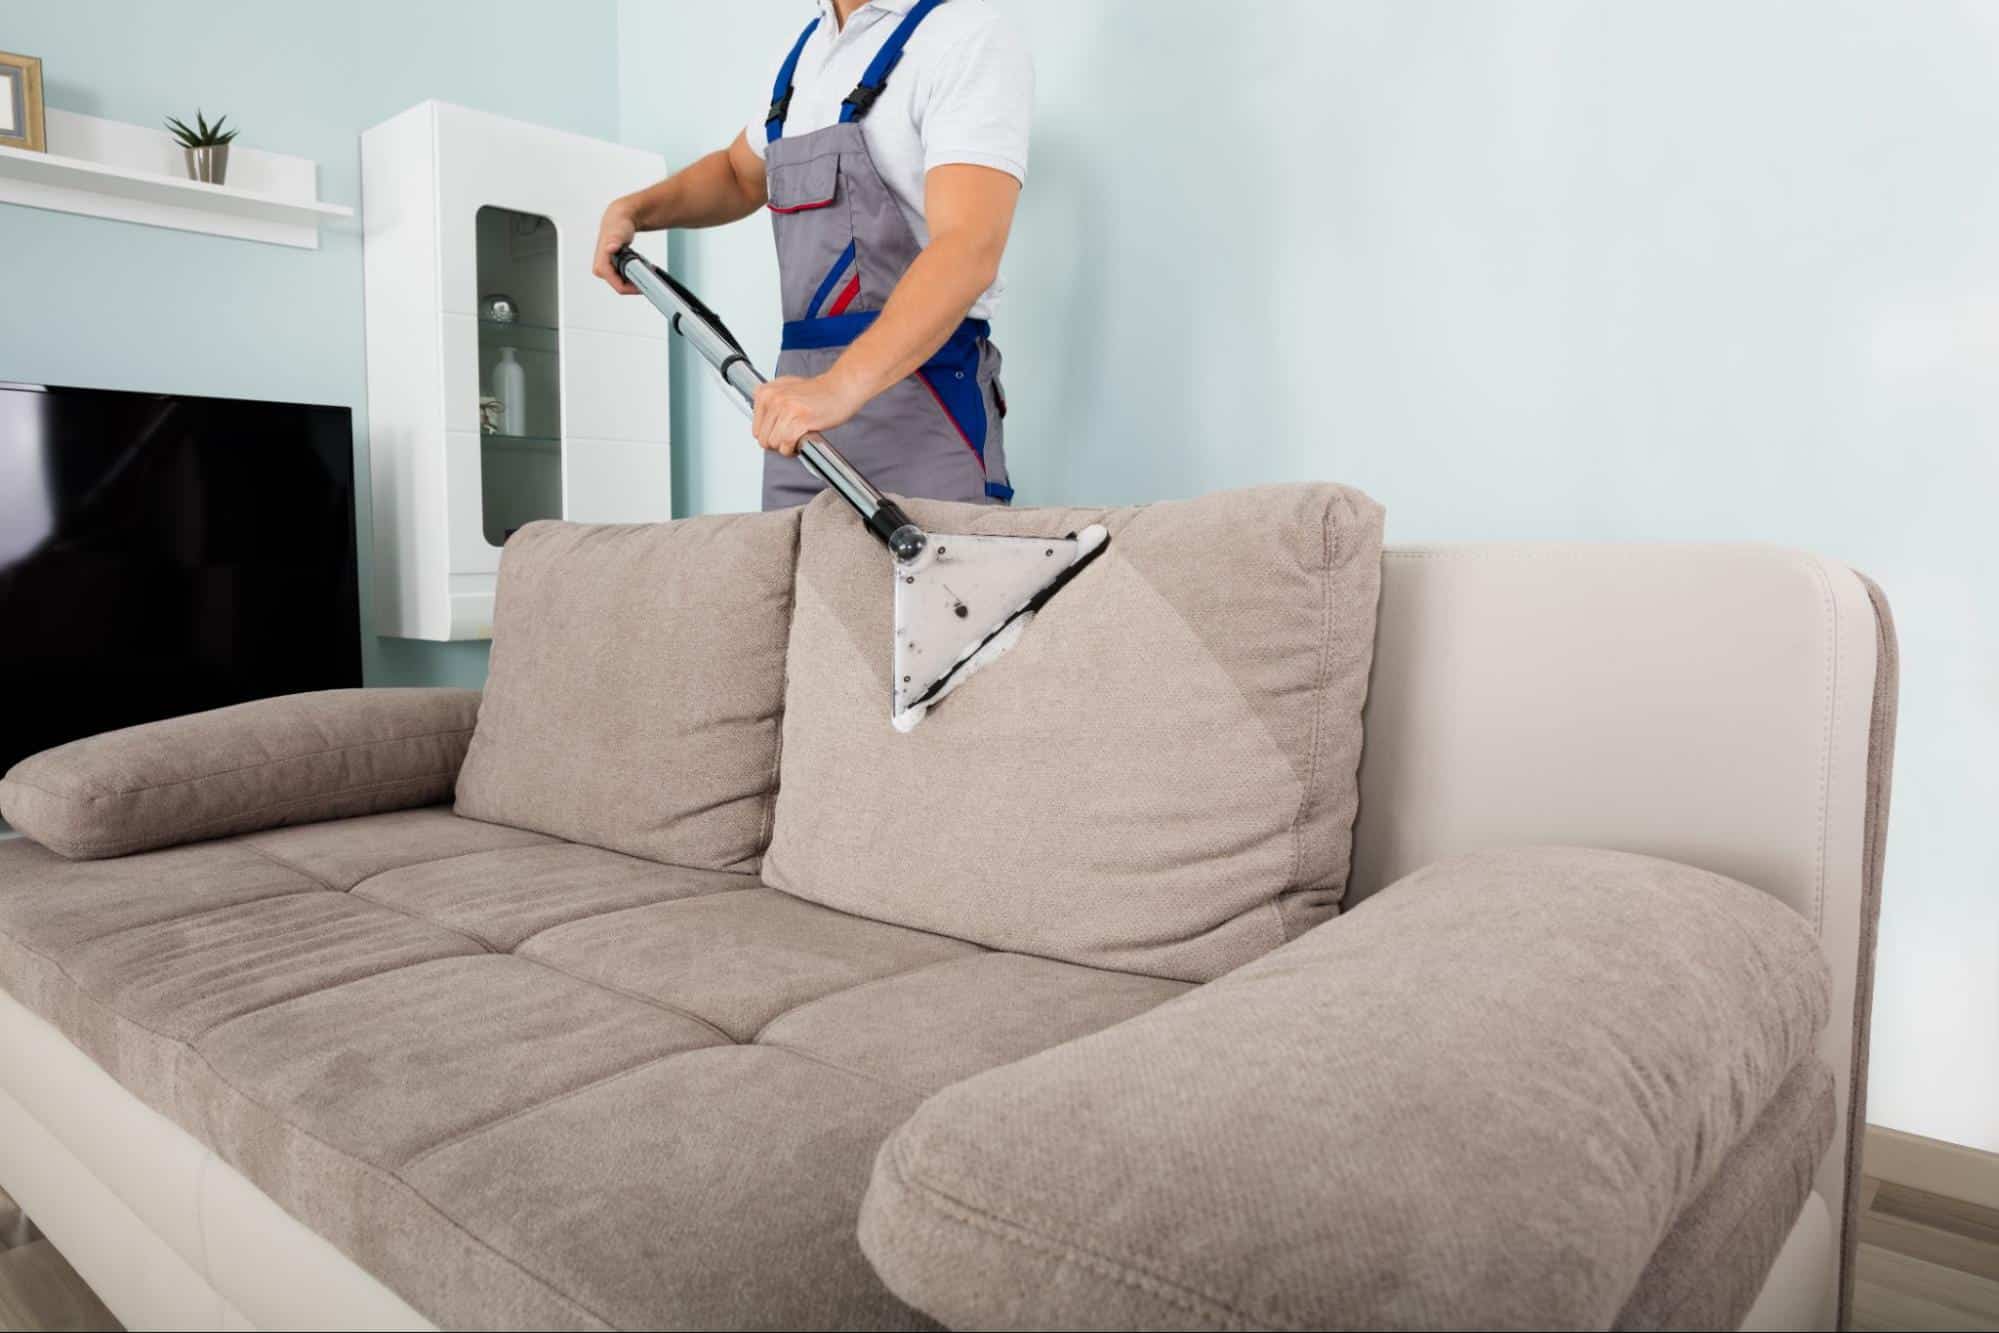 cleaning-sofa ทำความสะอาดโซฟาควรเลือกอุปกรณ์ที่เหมาะสม